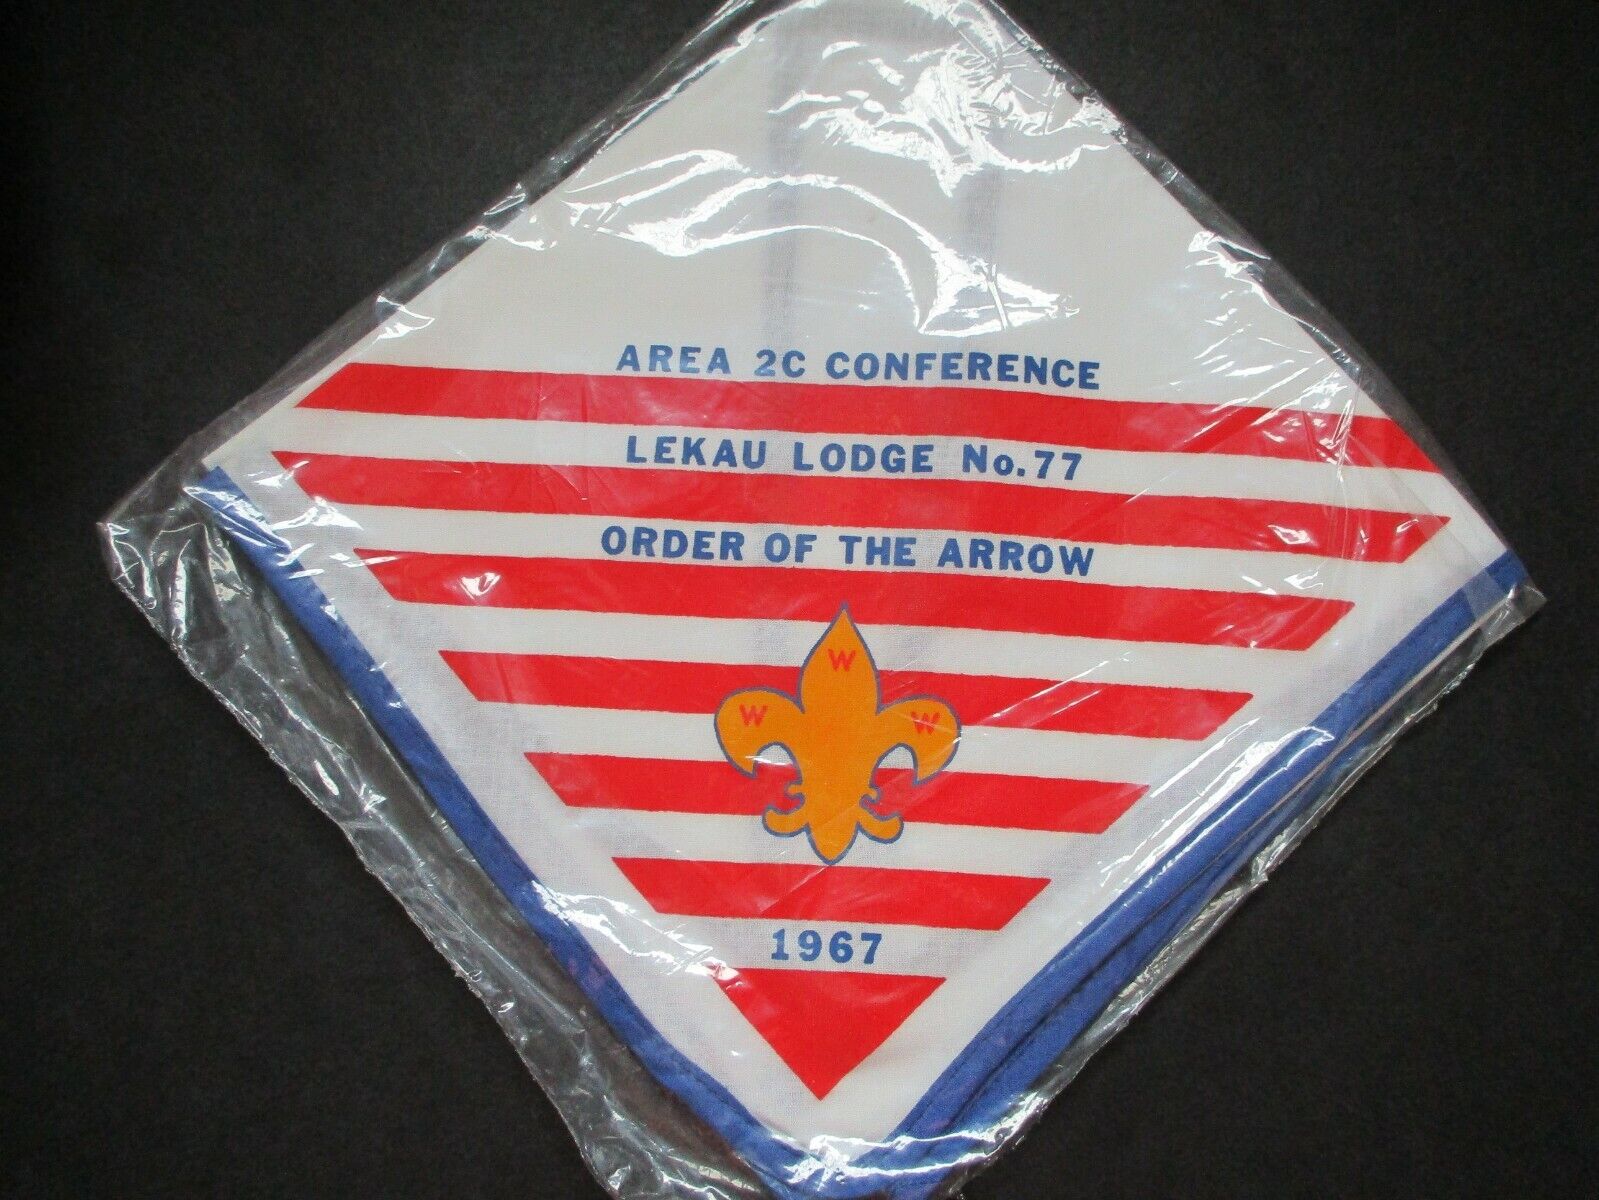 1967 Area 2C Conference Lekau Lodge No. 77 boy scout neckerchief